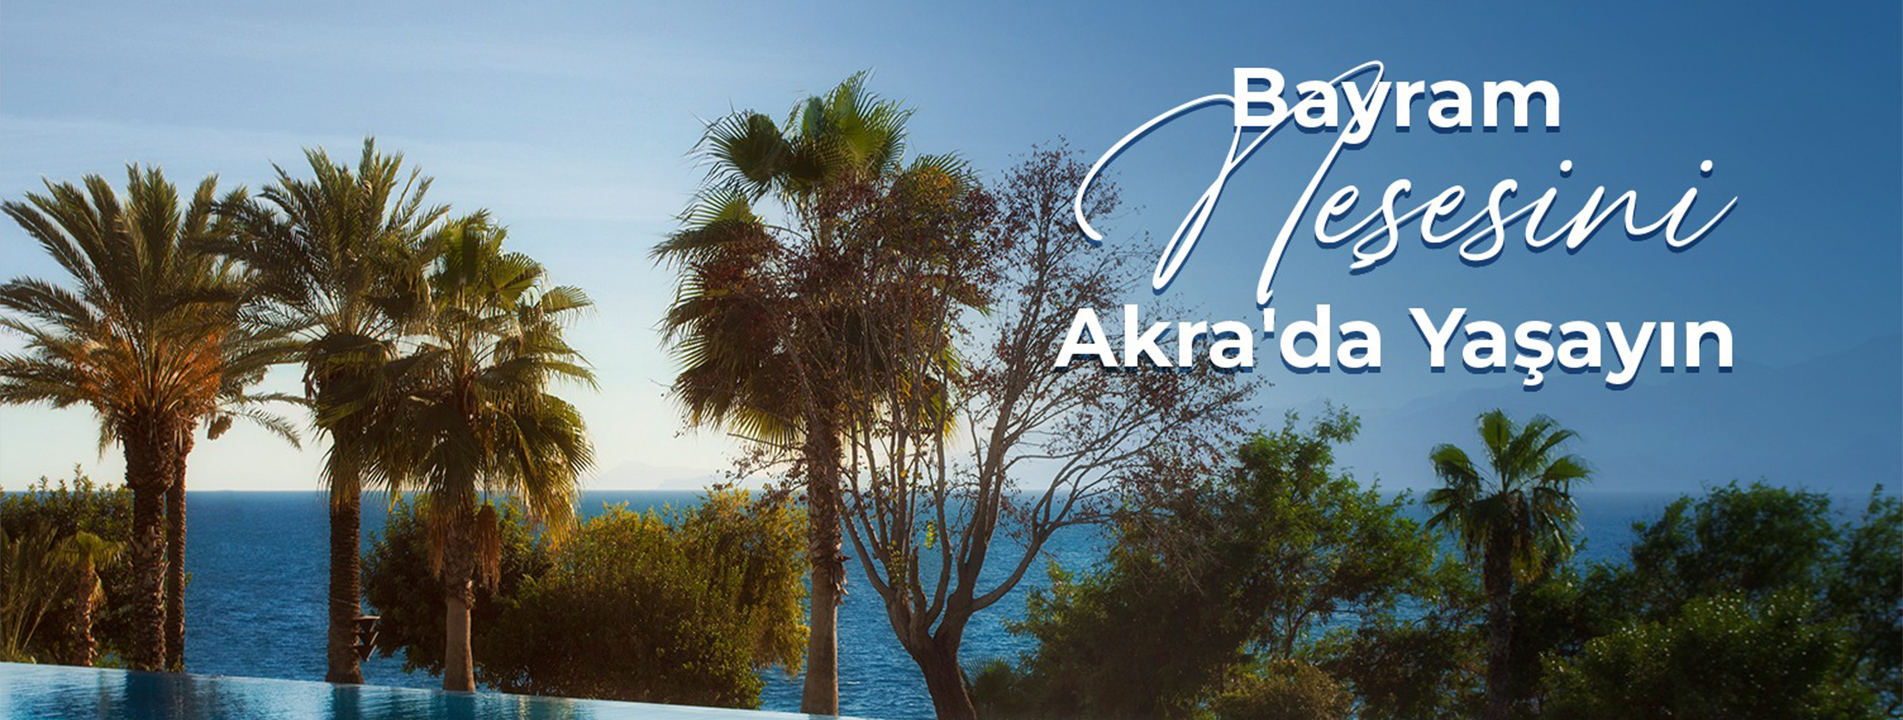 Akra Hotels Firsat Kurban Bayrami Banner